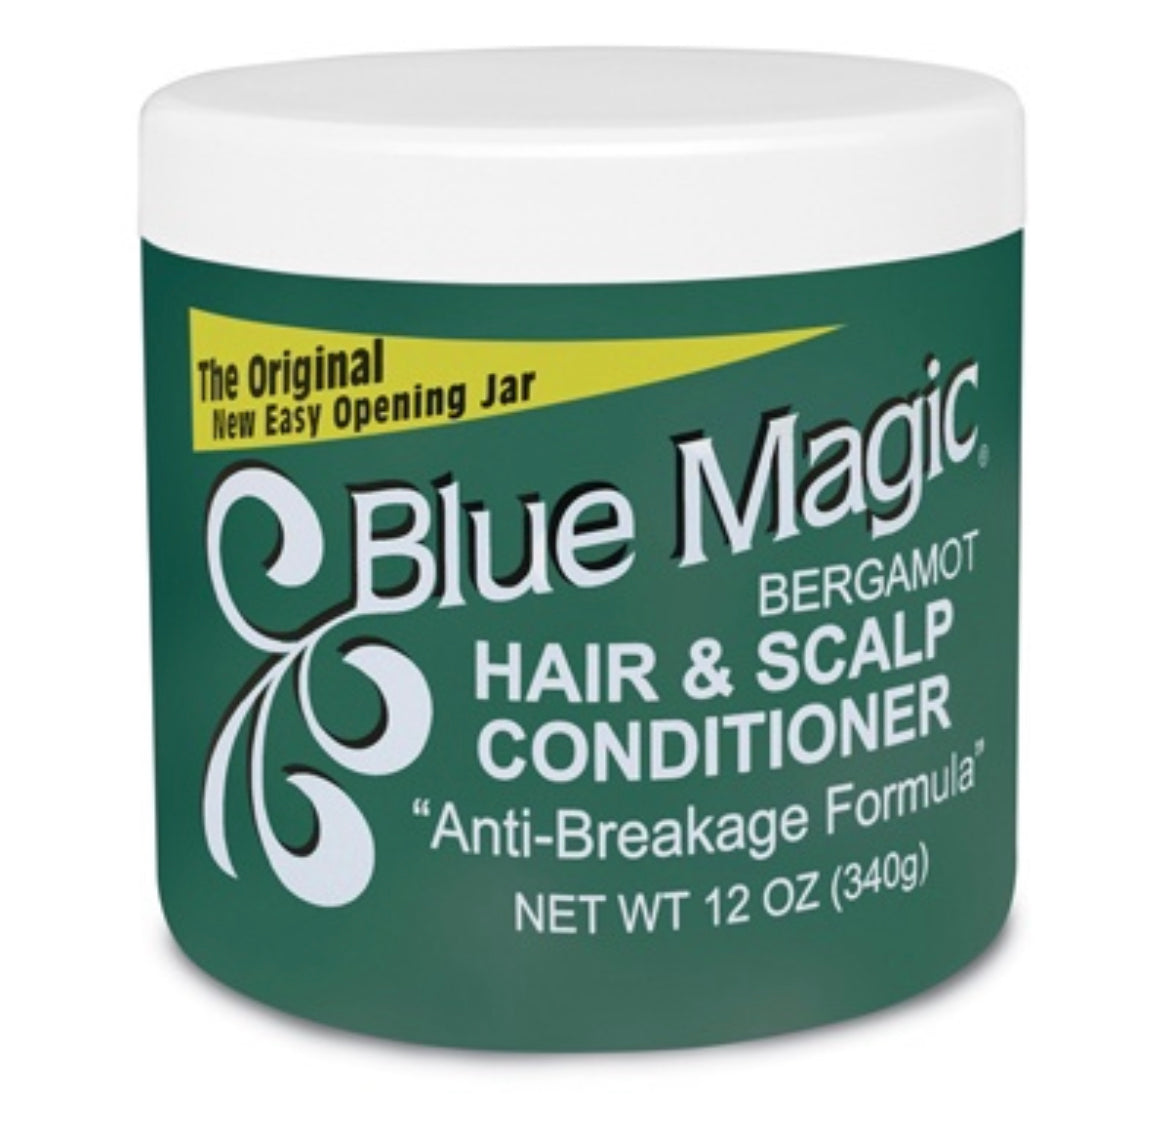 BLUE MAGIC BERGAMOT HAIR & SCALP CONDITIONER